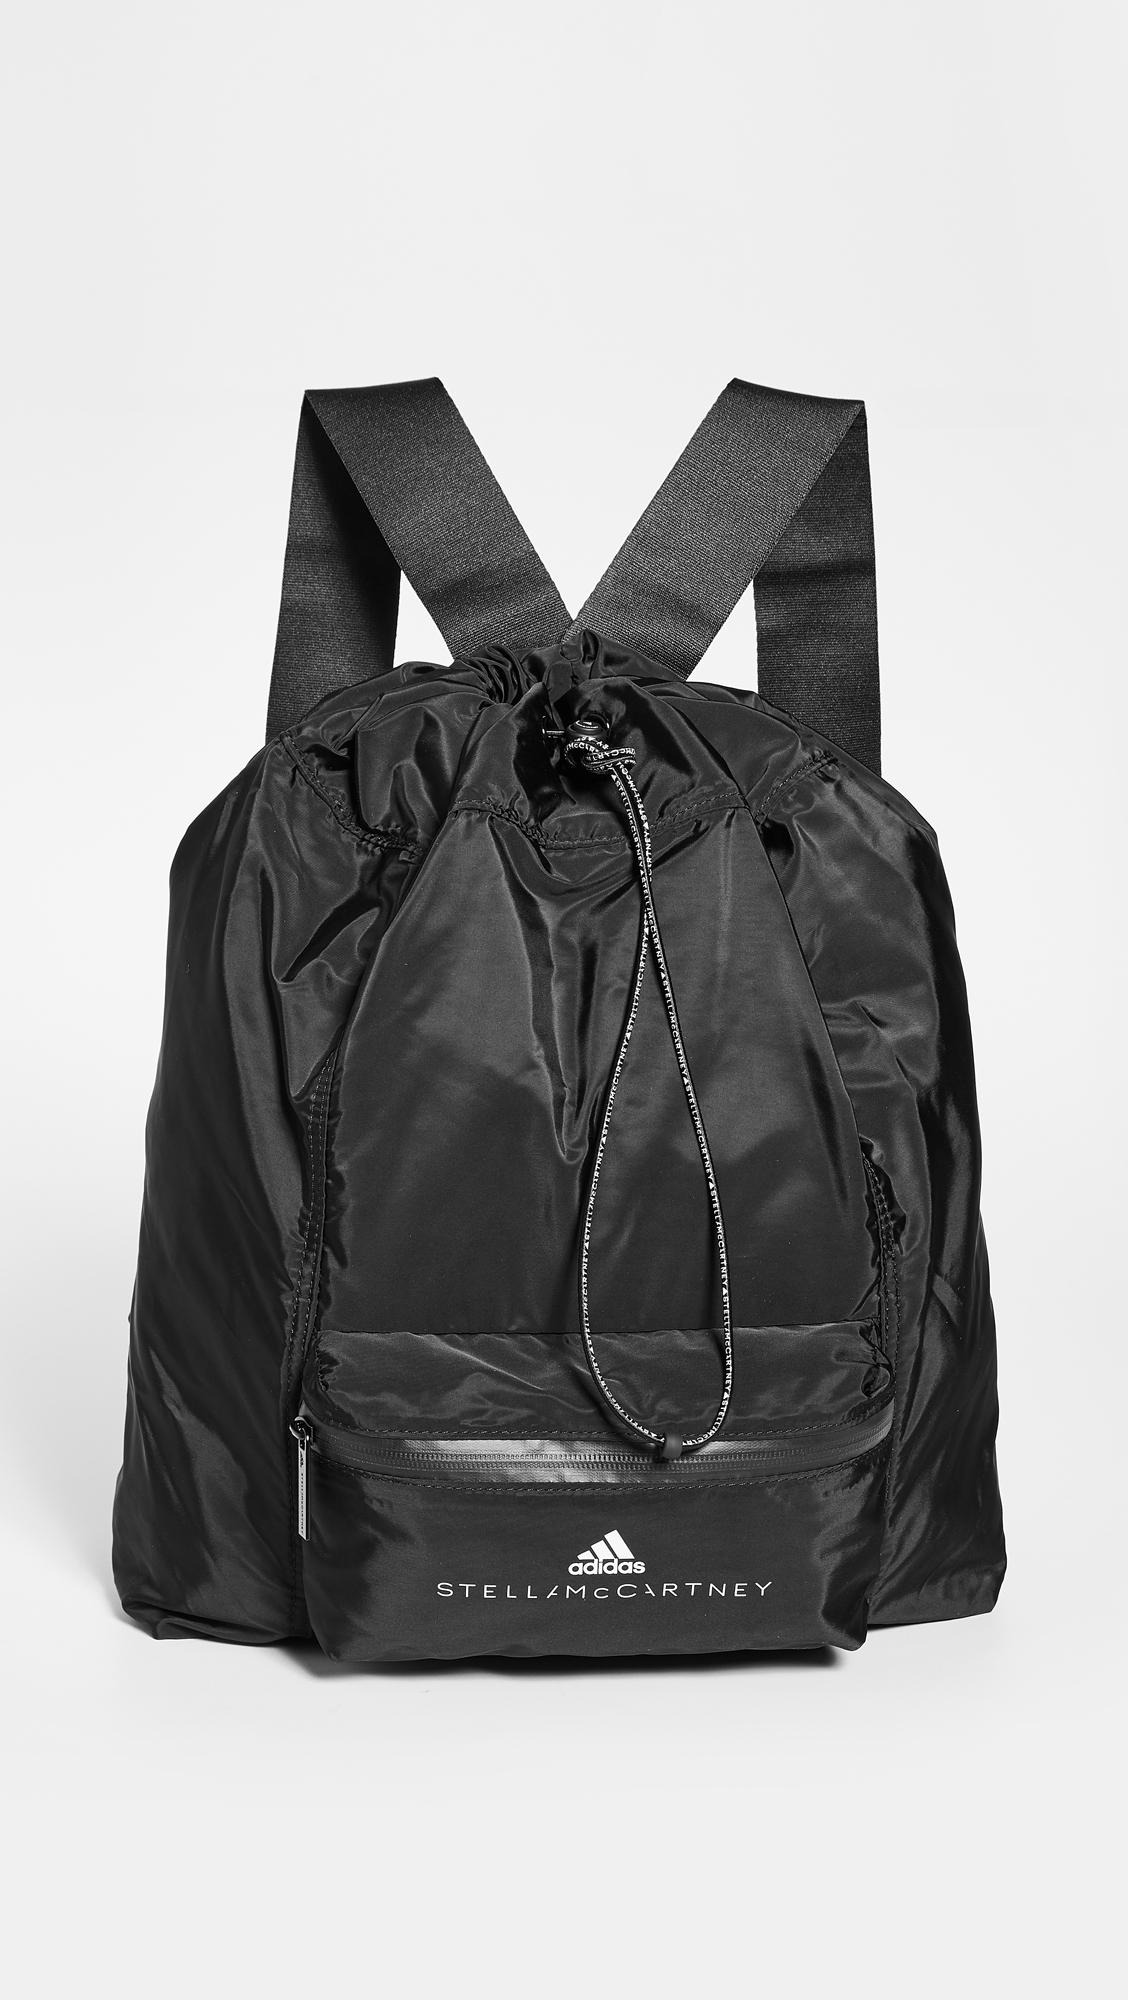 adidas By Stella McCartney Gymsack Backpack in Black/White (Black) | Lyst